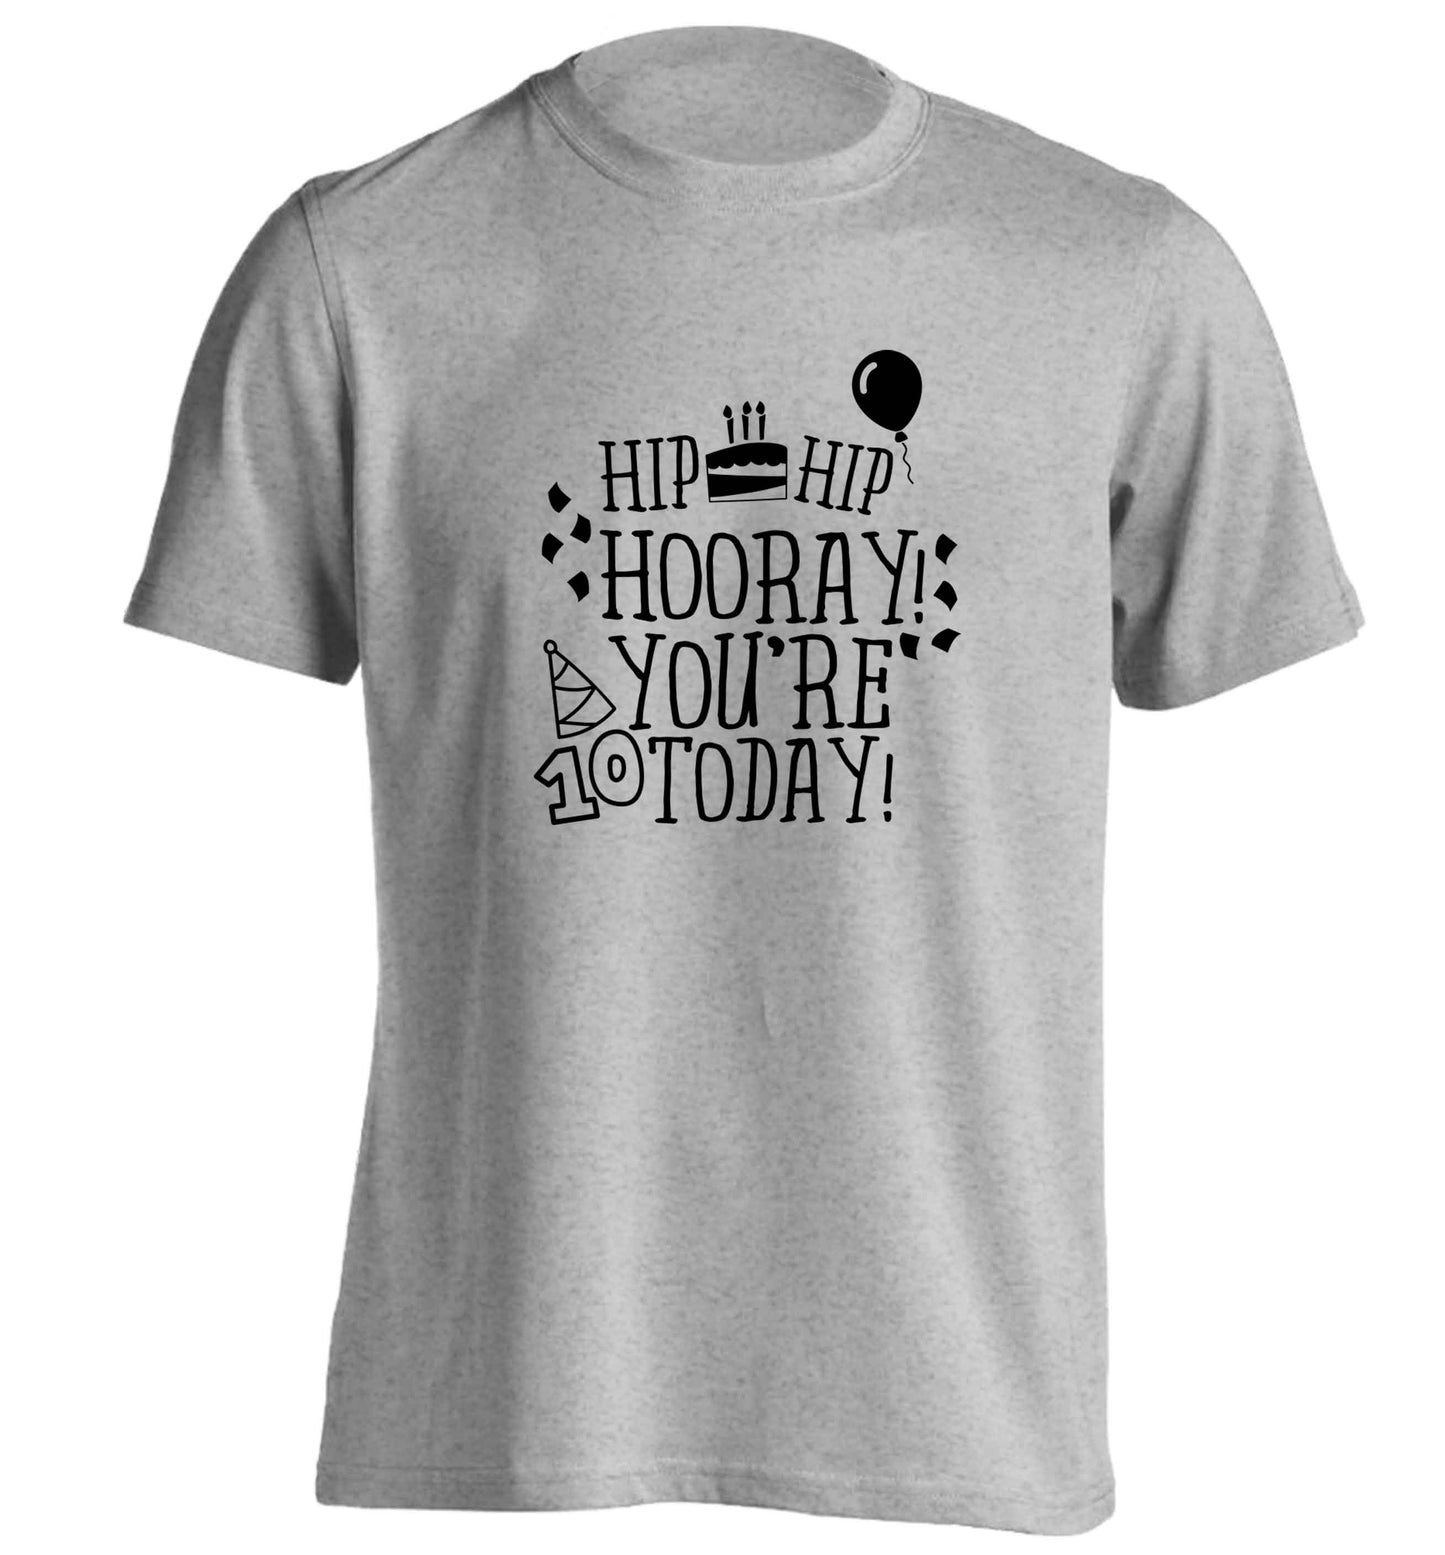 Hip hip hooray you're ten today! adults unisex grey Tshirt 2XL